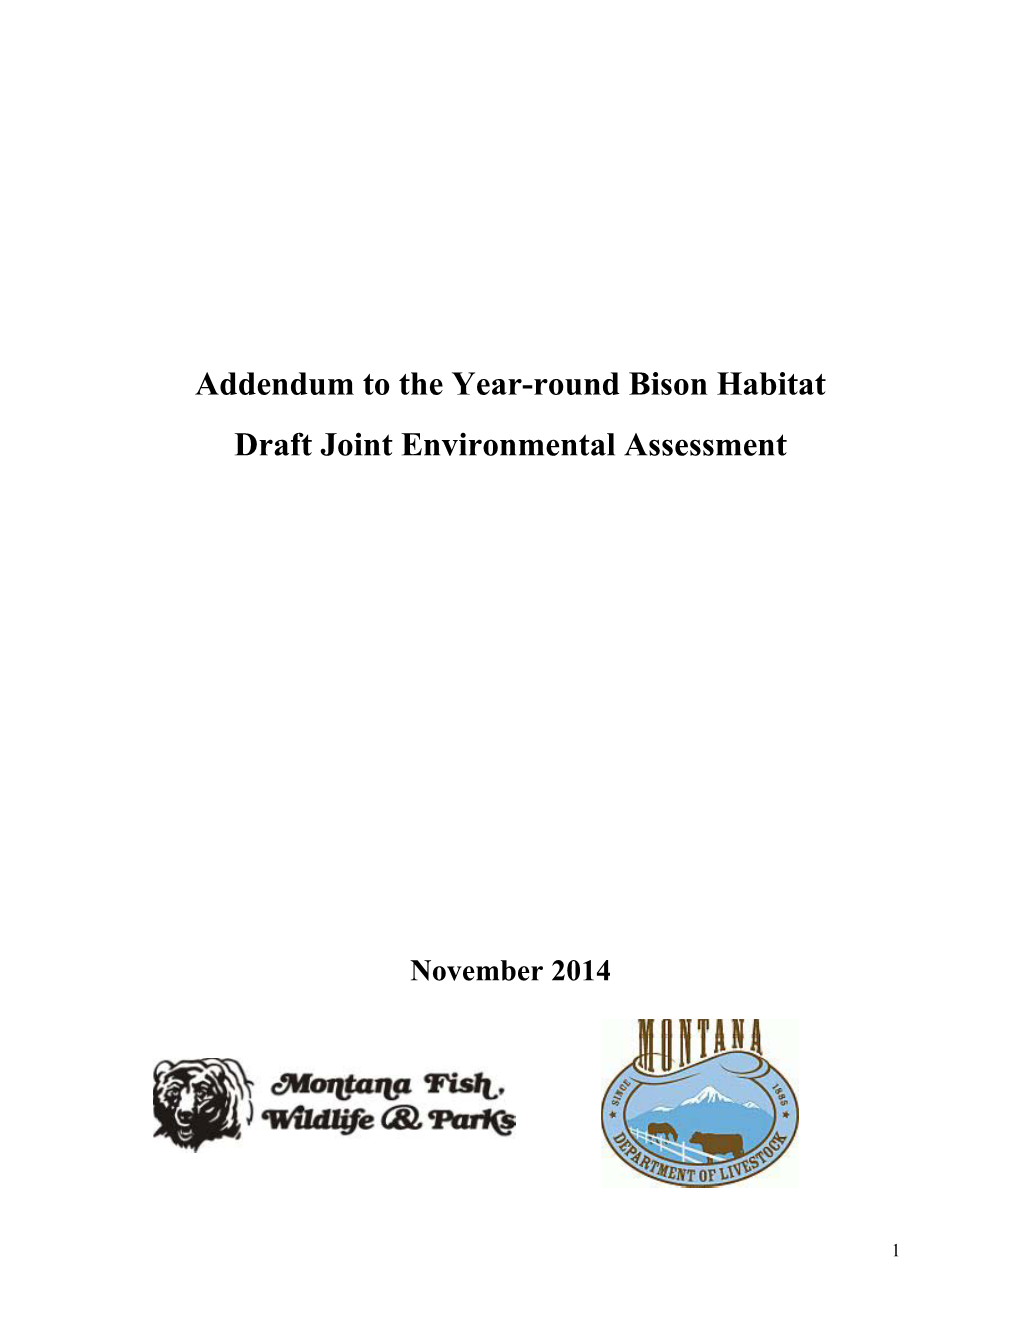 Addendum to the Year-Round Bison Habitat Draft Joint Environmental Assessment